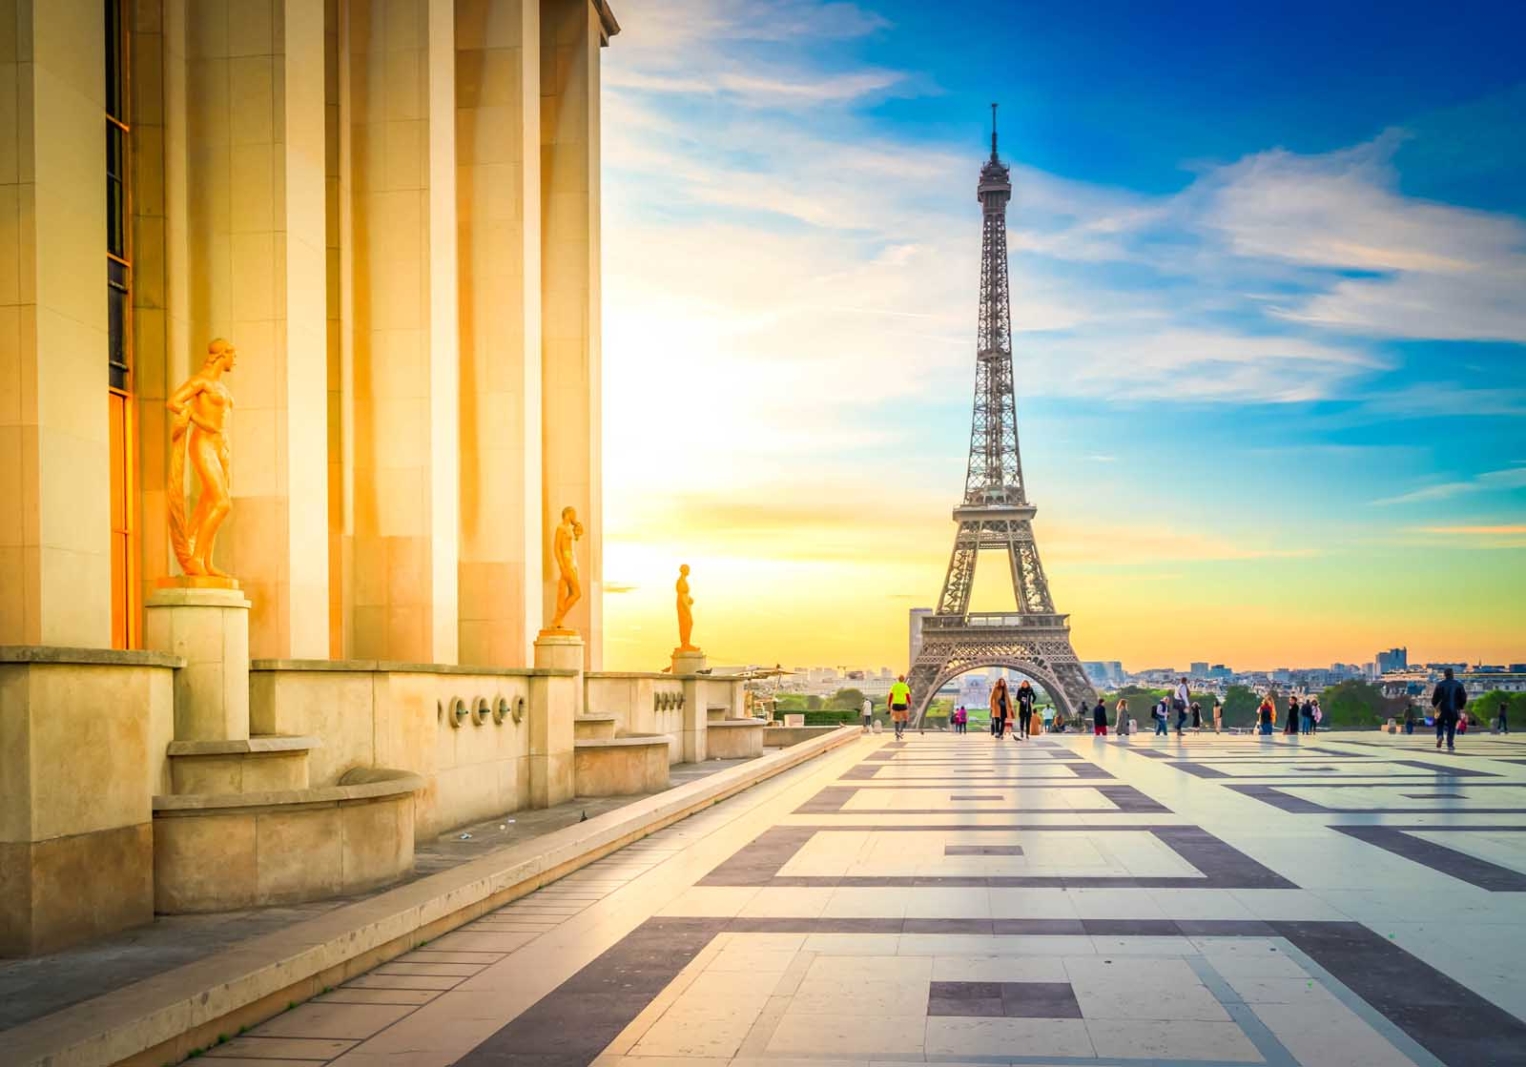 Is Paris expensive to visit